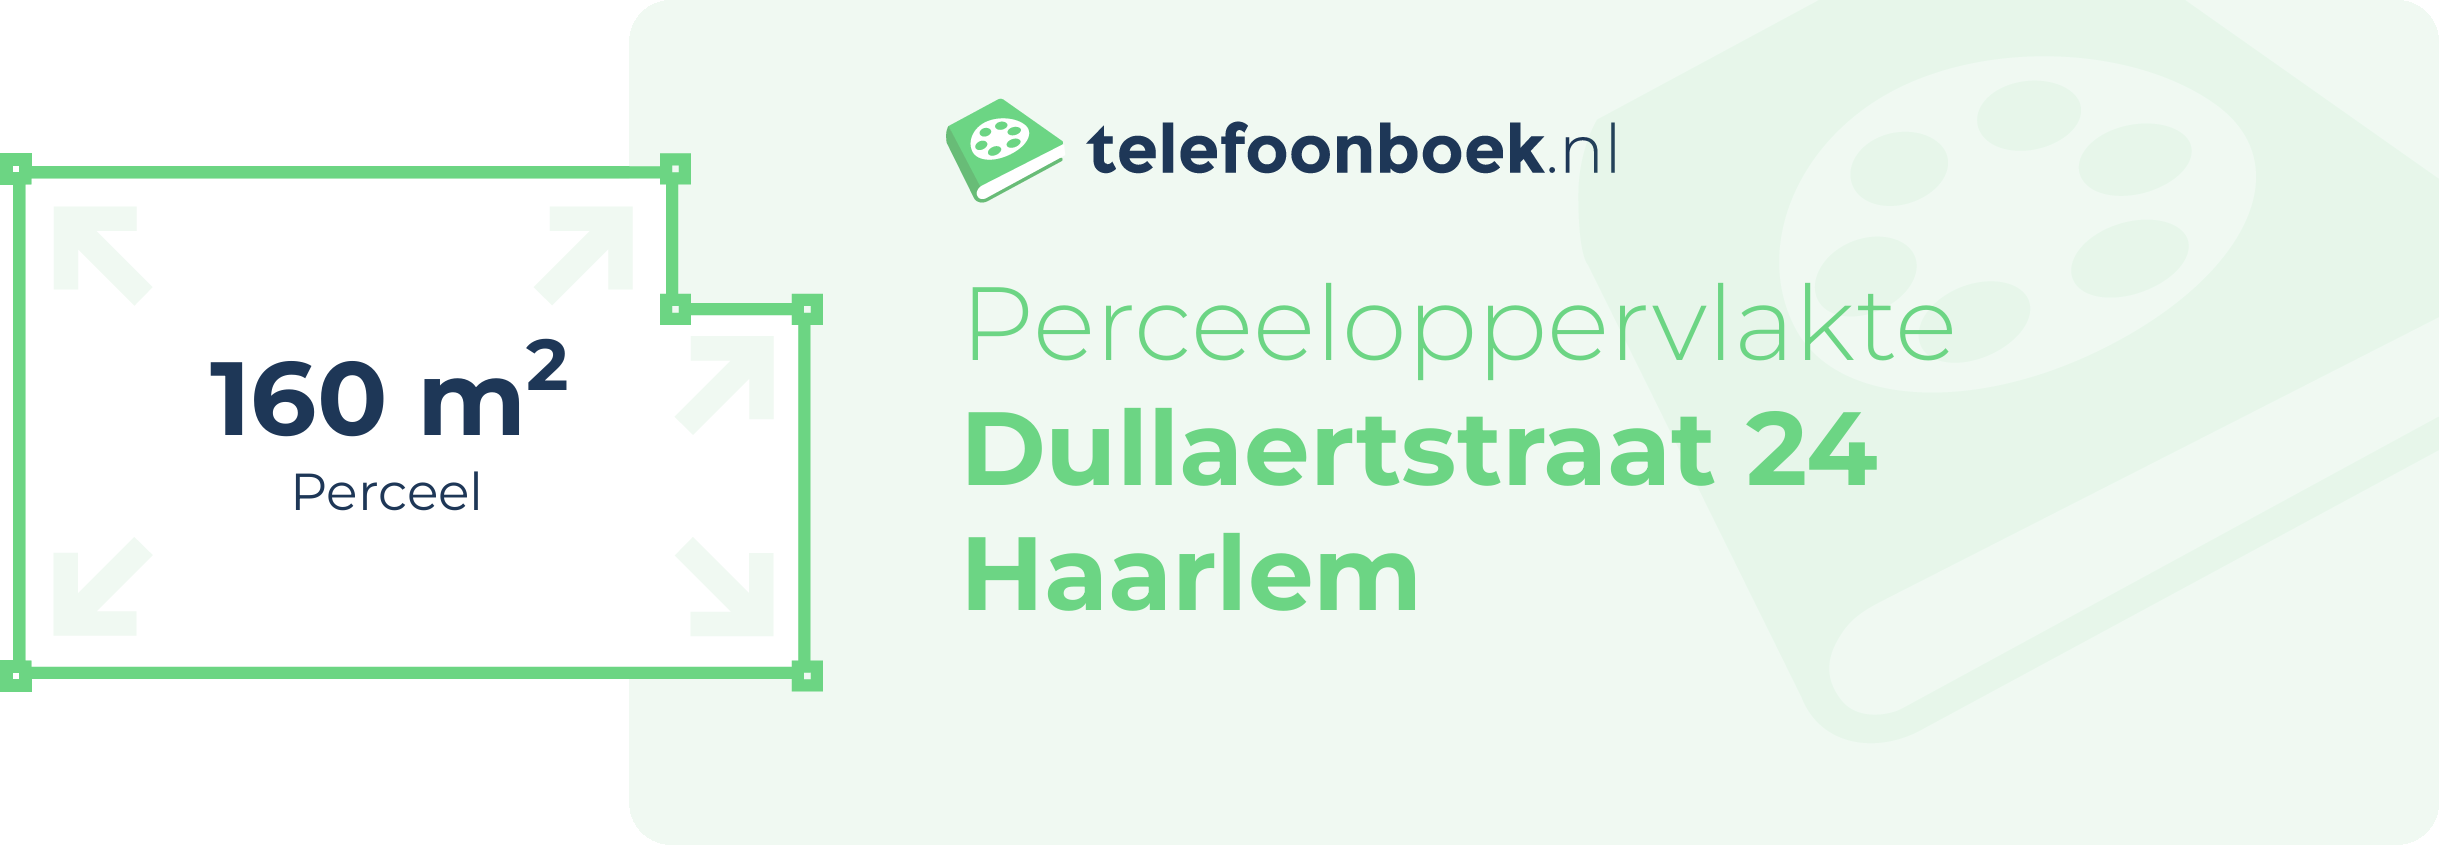 Perceeloppervlakte Dullaertstraat 24 Haarlem